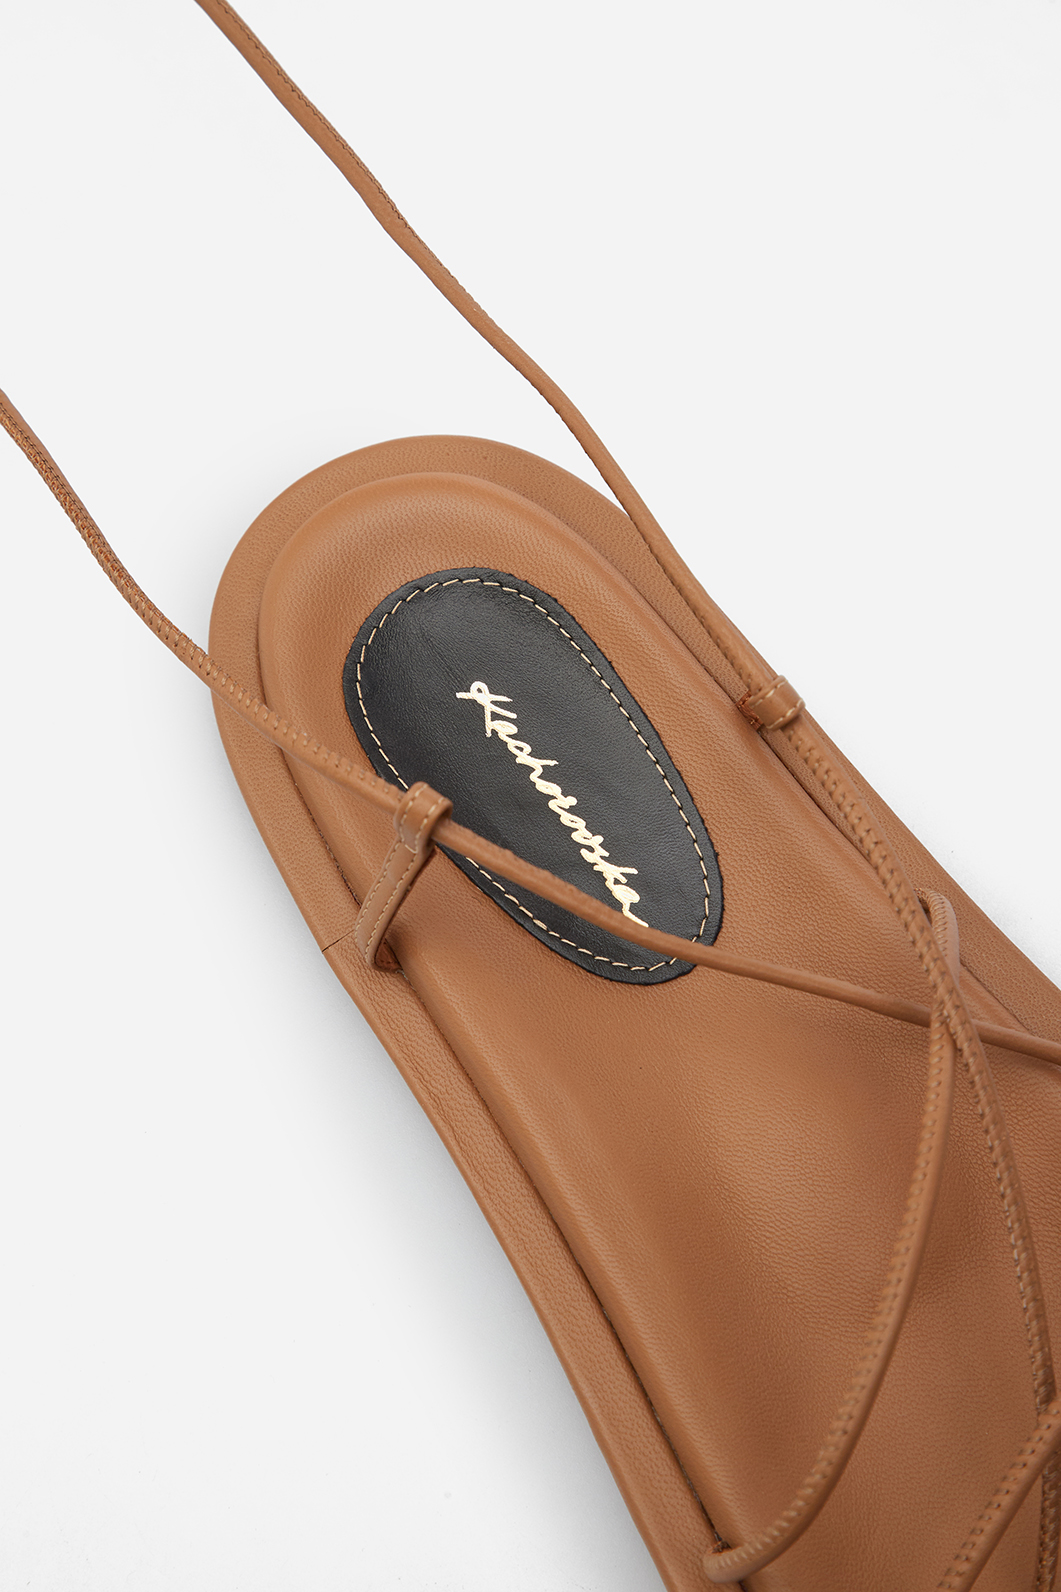 Sam caramel colored leather
sandals